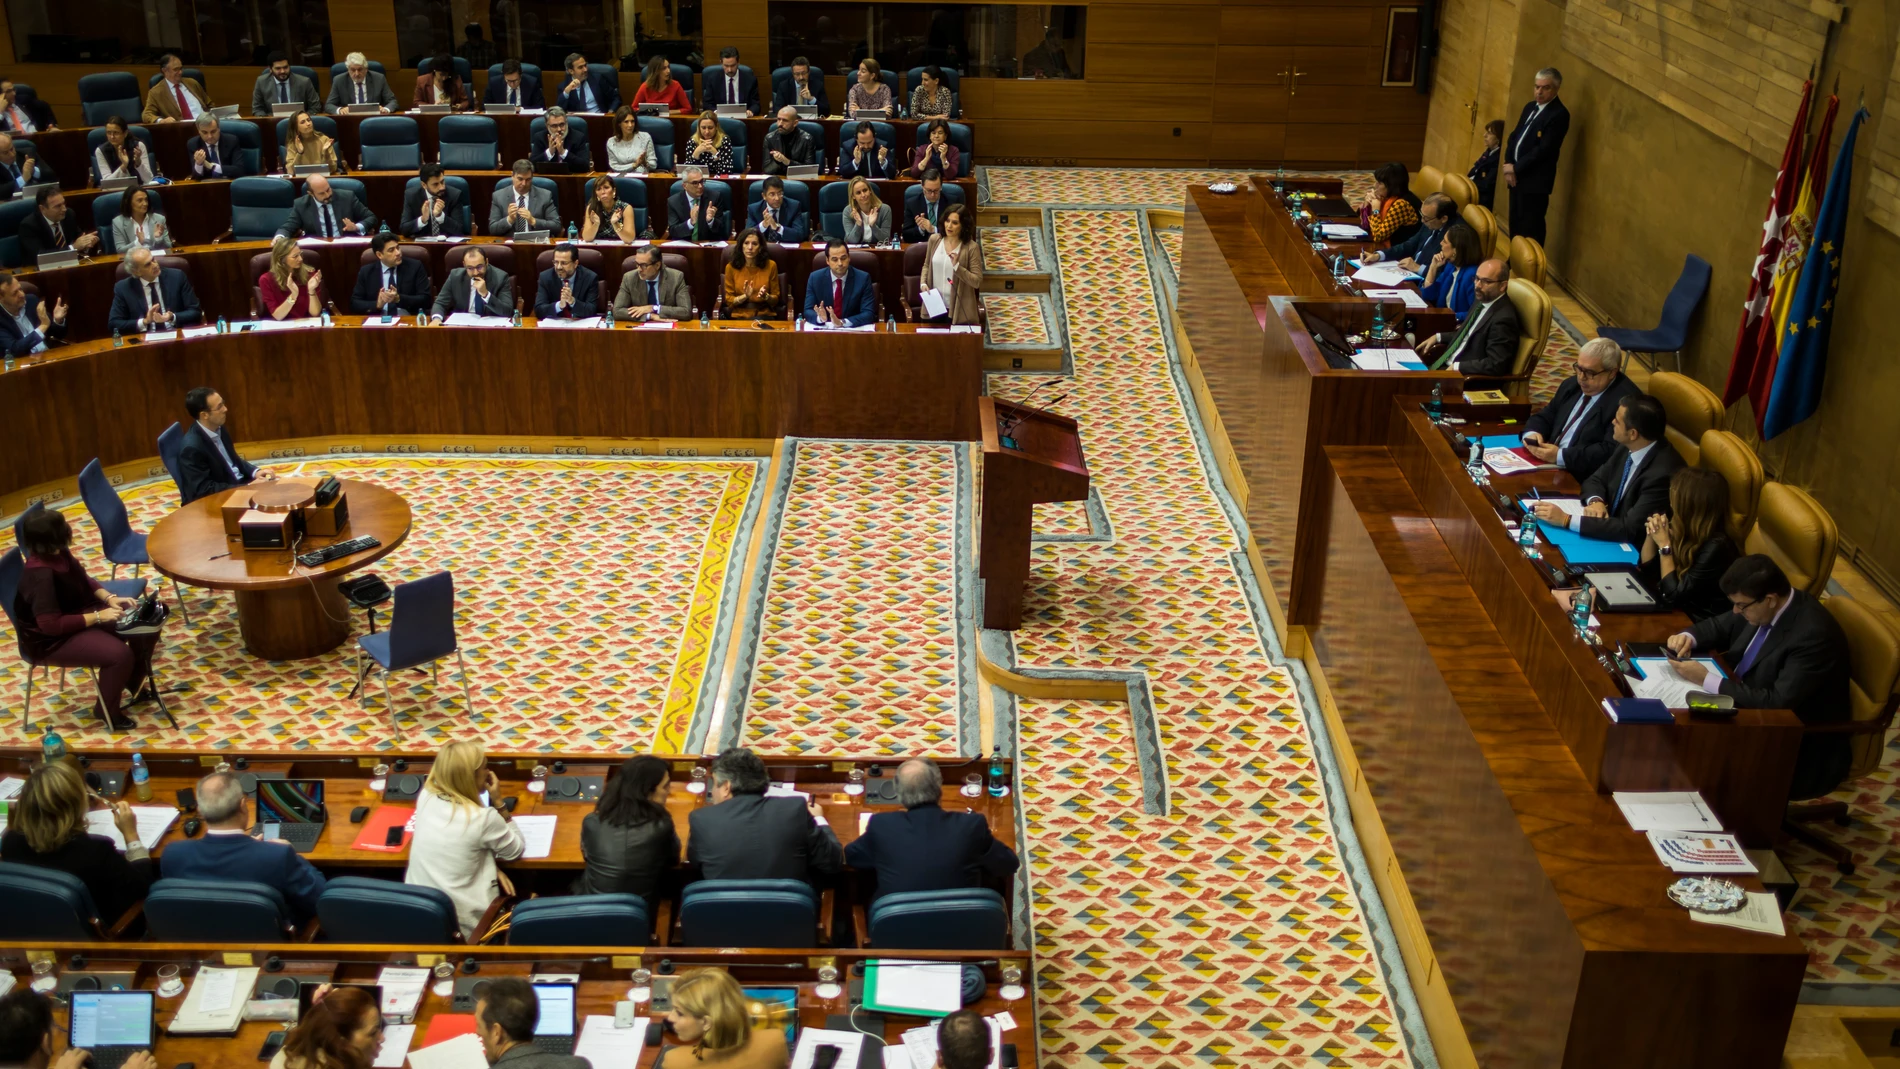 Plano General de la Sesion del Pleno de la Asamblea de Madrid.